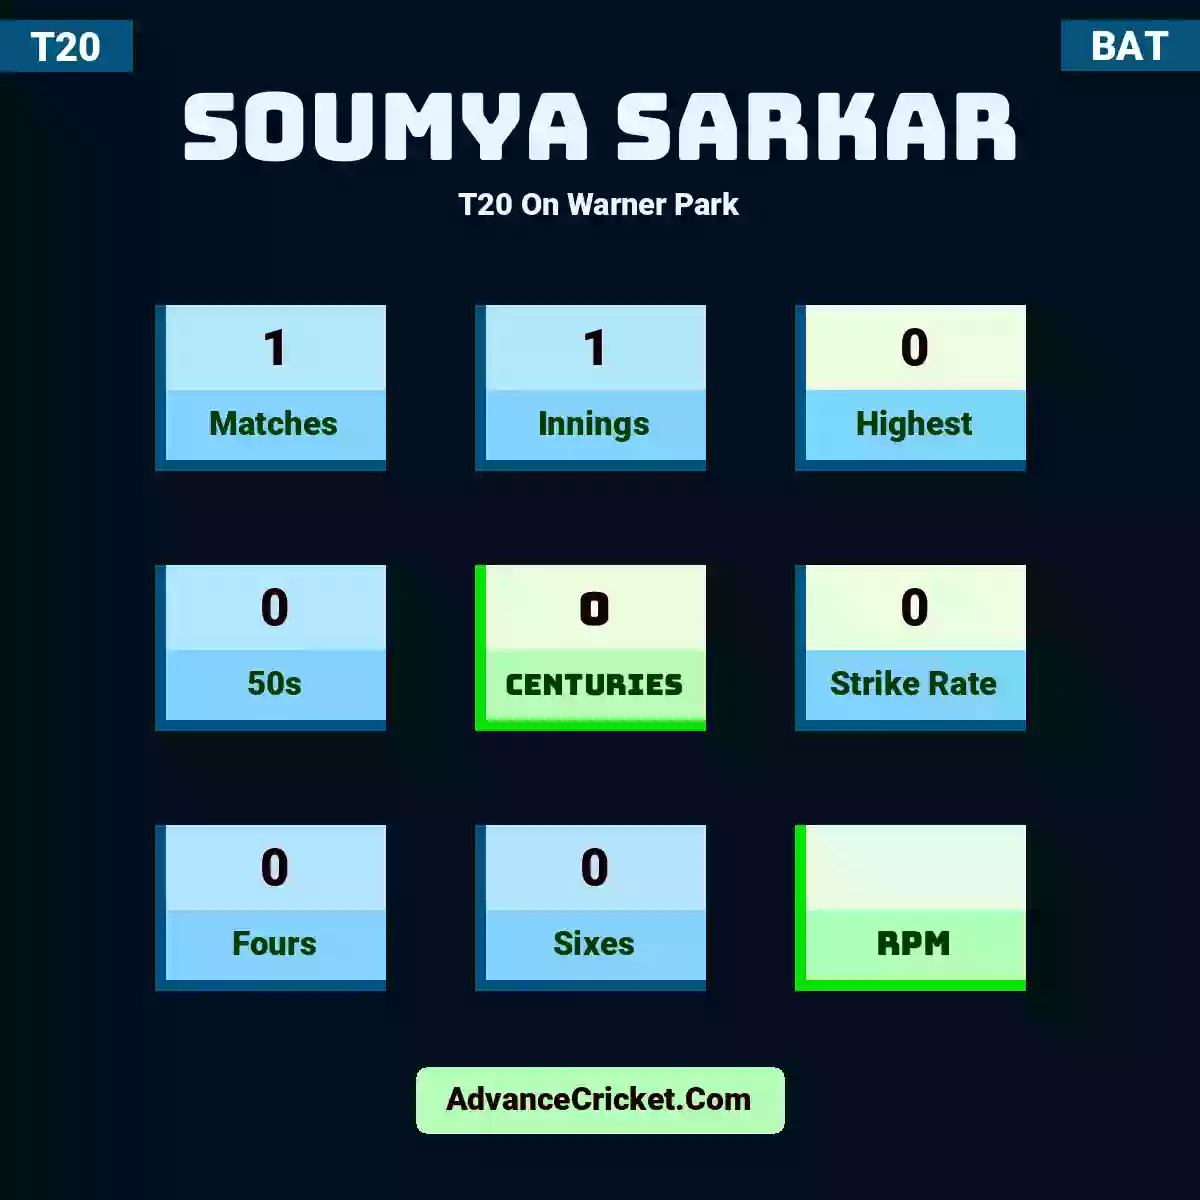 Soumya Sarkar T20  On Warner Park, Soumya Sarkar played 1 matches, scored 0 runs as highest, 0 half-centuries, and 0 centuries, with a strike rate of 0. S.Sarkar hit 0 fours and 0 sixes.